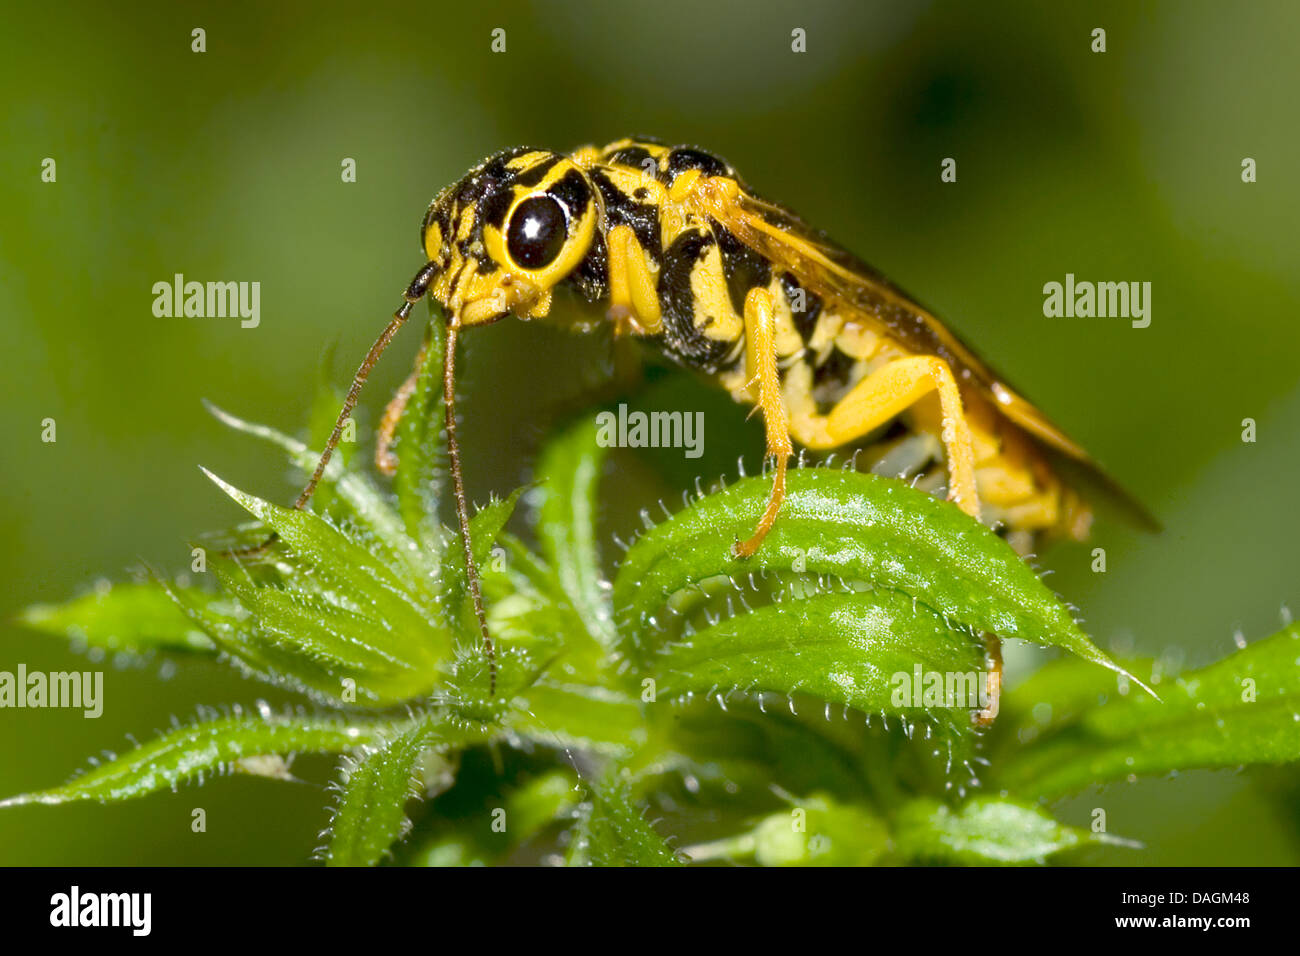 Blattwespe, Sawfly (Aglaostigma fulvipes), on a young plant, Germany Stock Photo